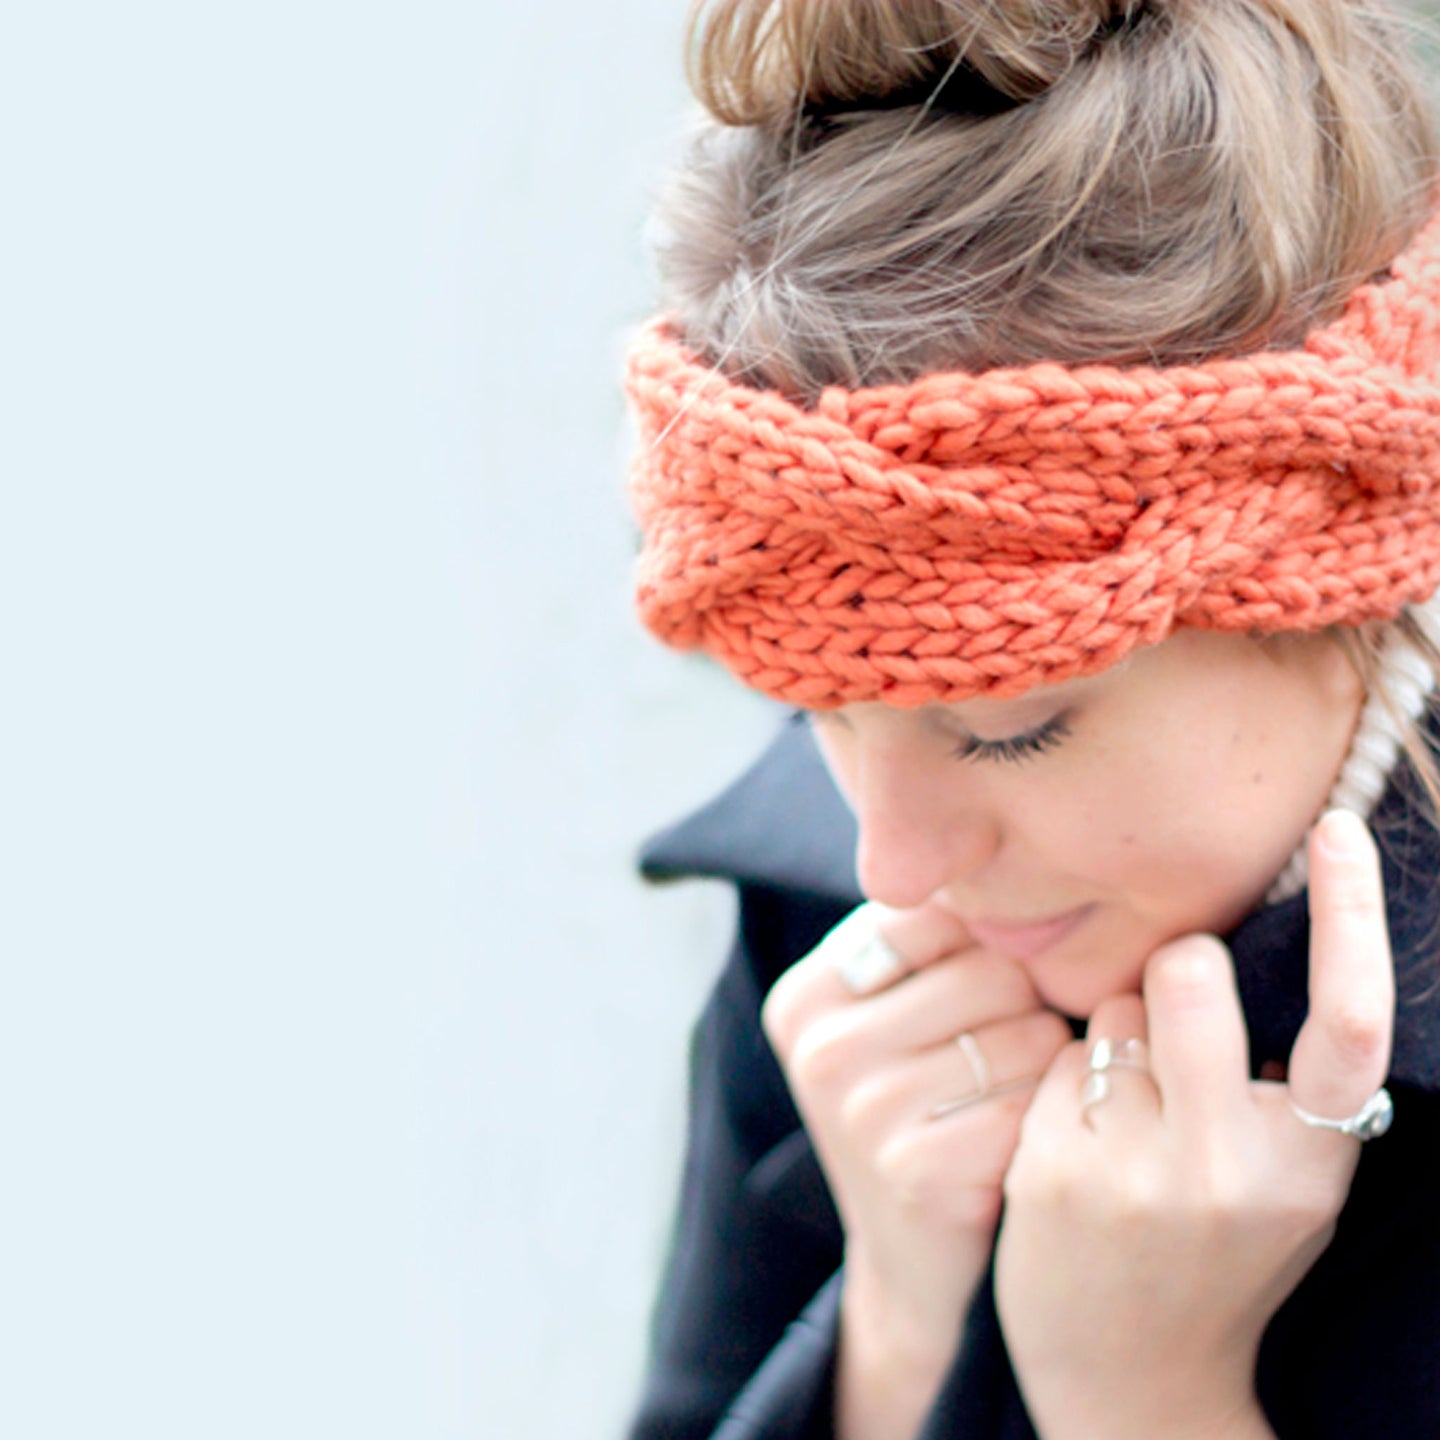 Creativity for Kids Quick Knit Headband Making Kit - Kids Knitting Kit for